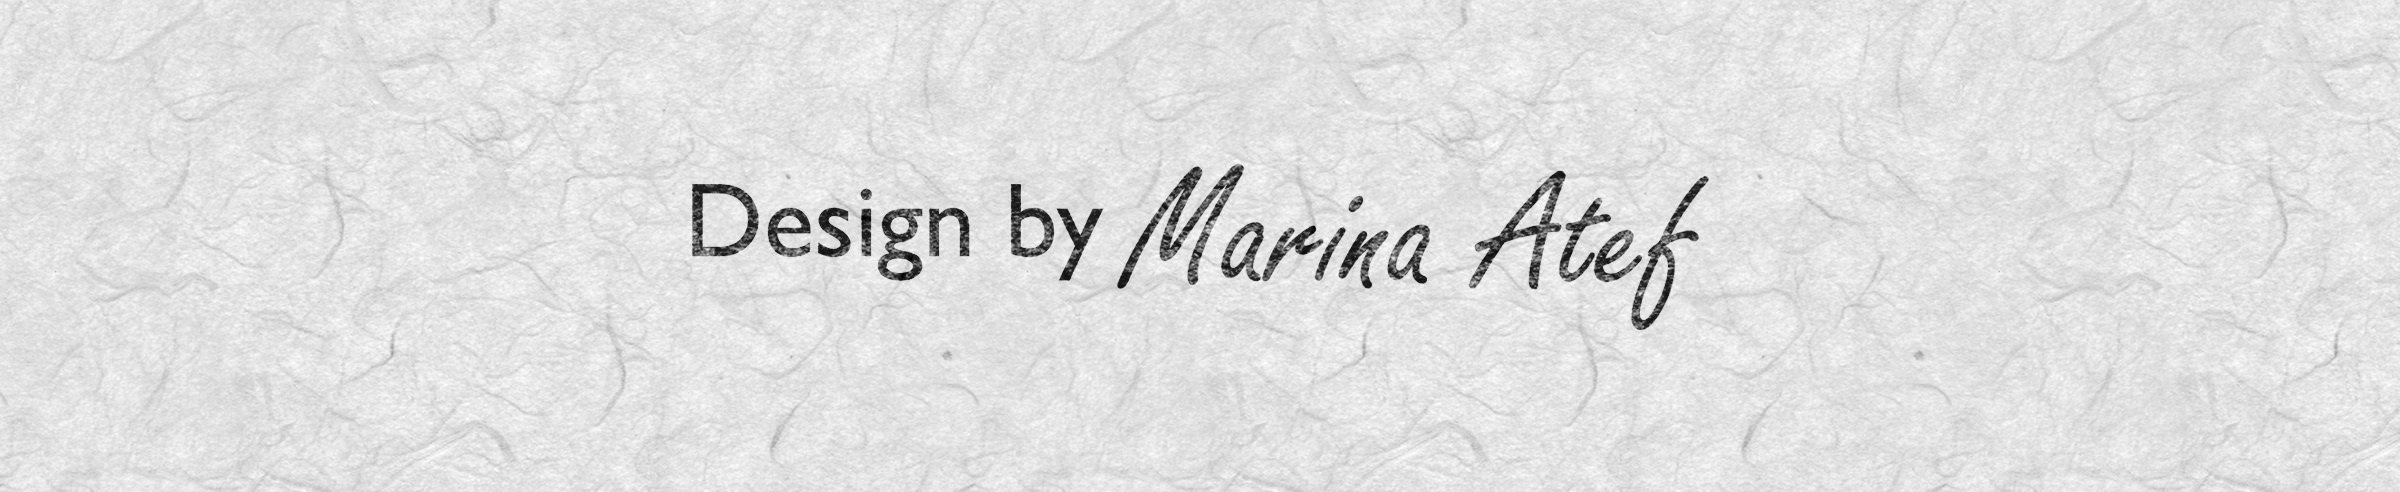 Marina Atef profil başlığı